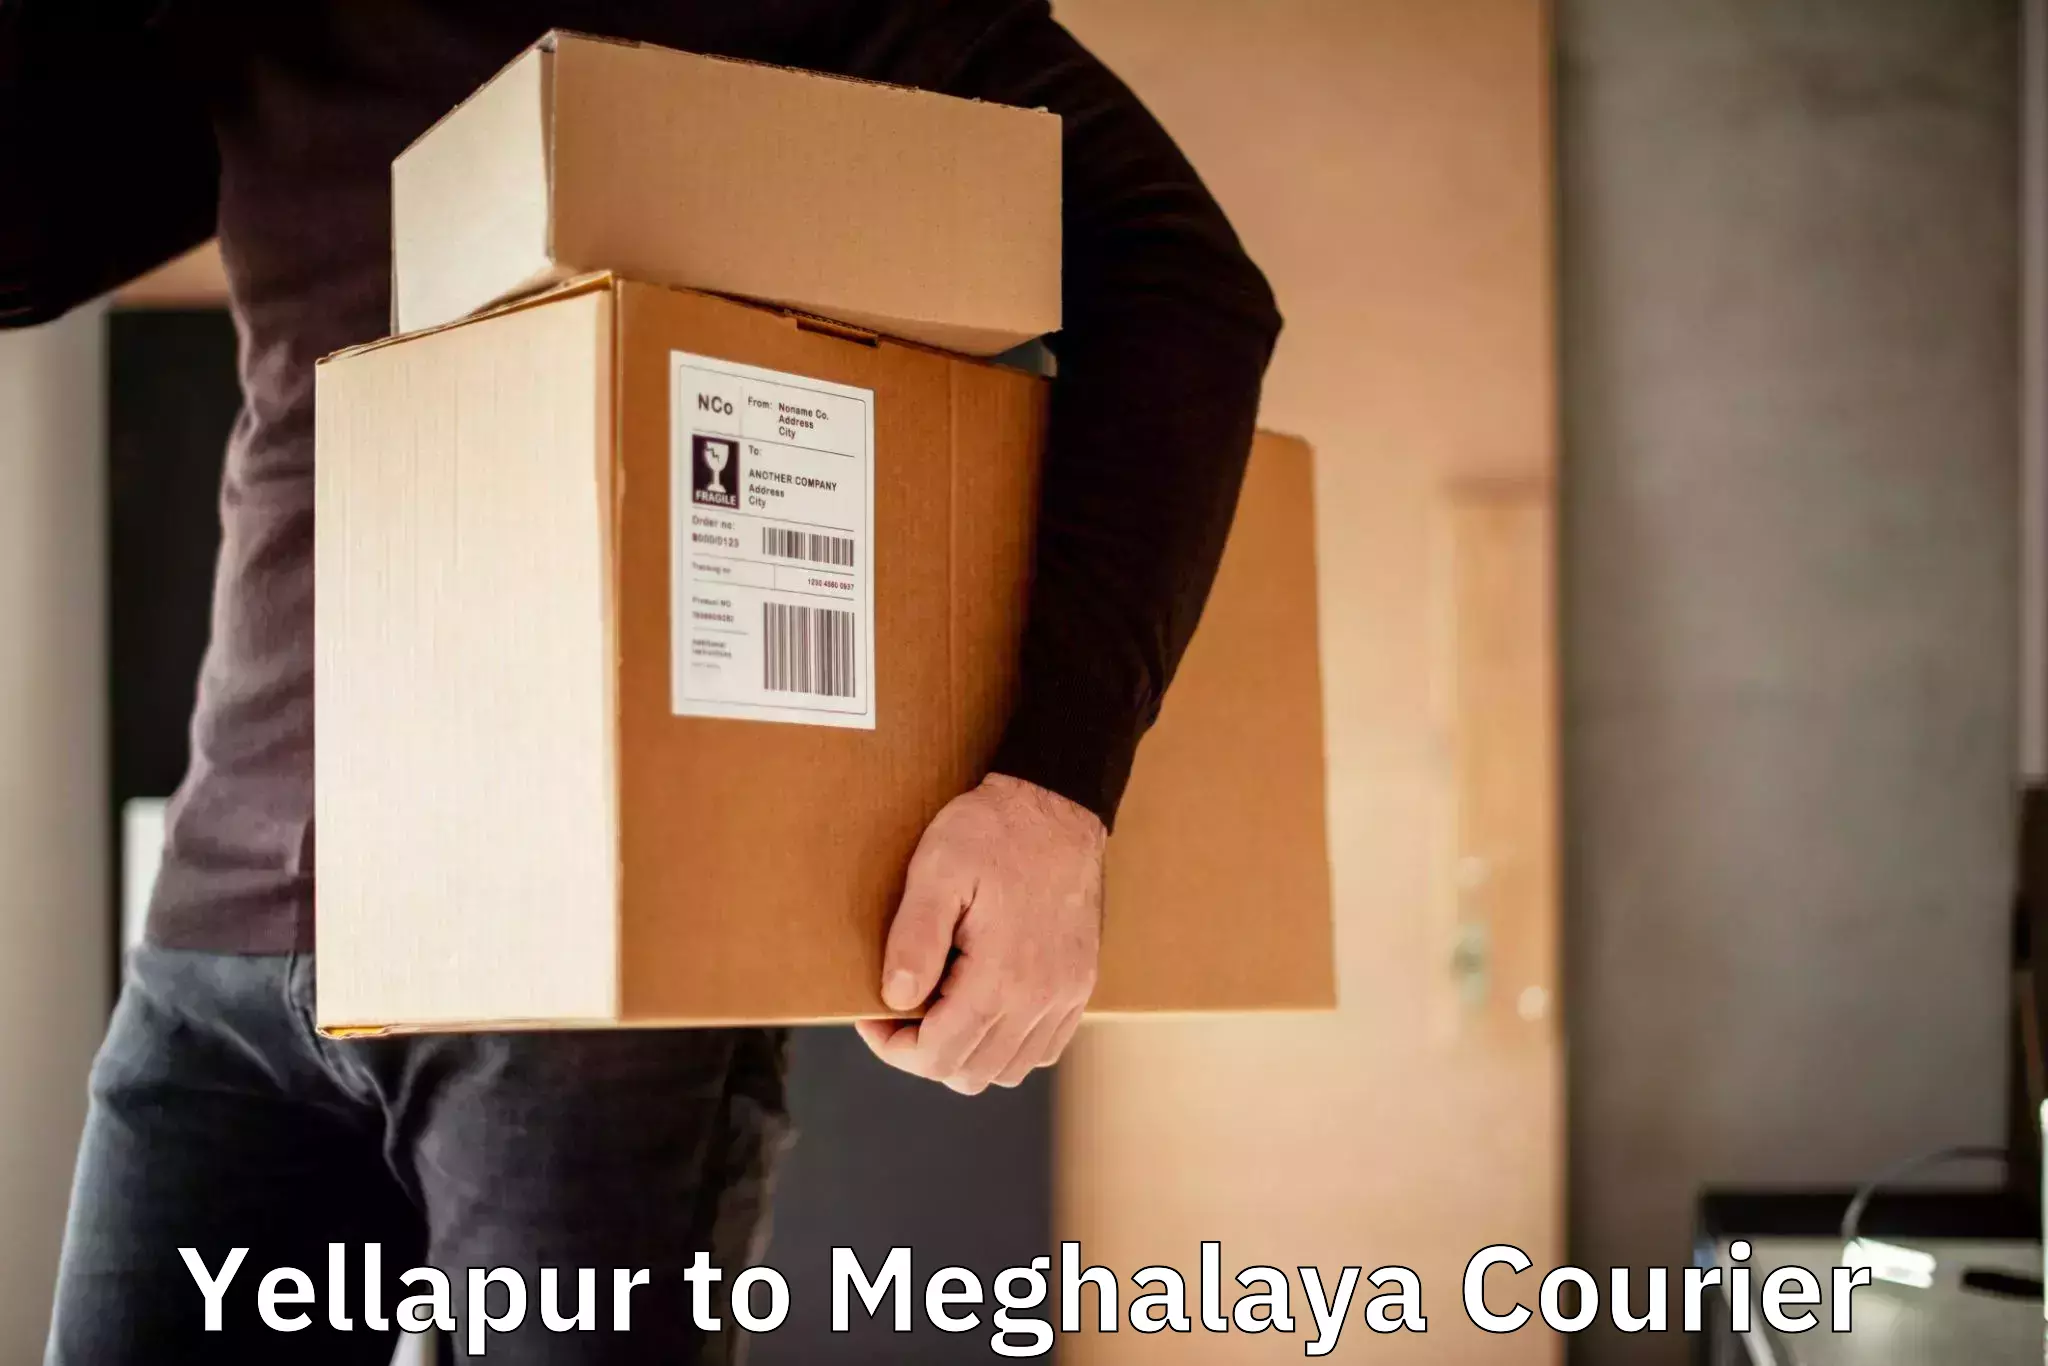 High-performance logistics Yellapur to Meghalaya